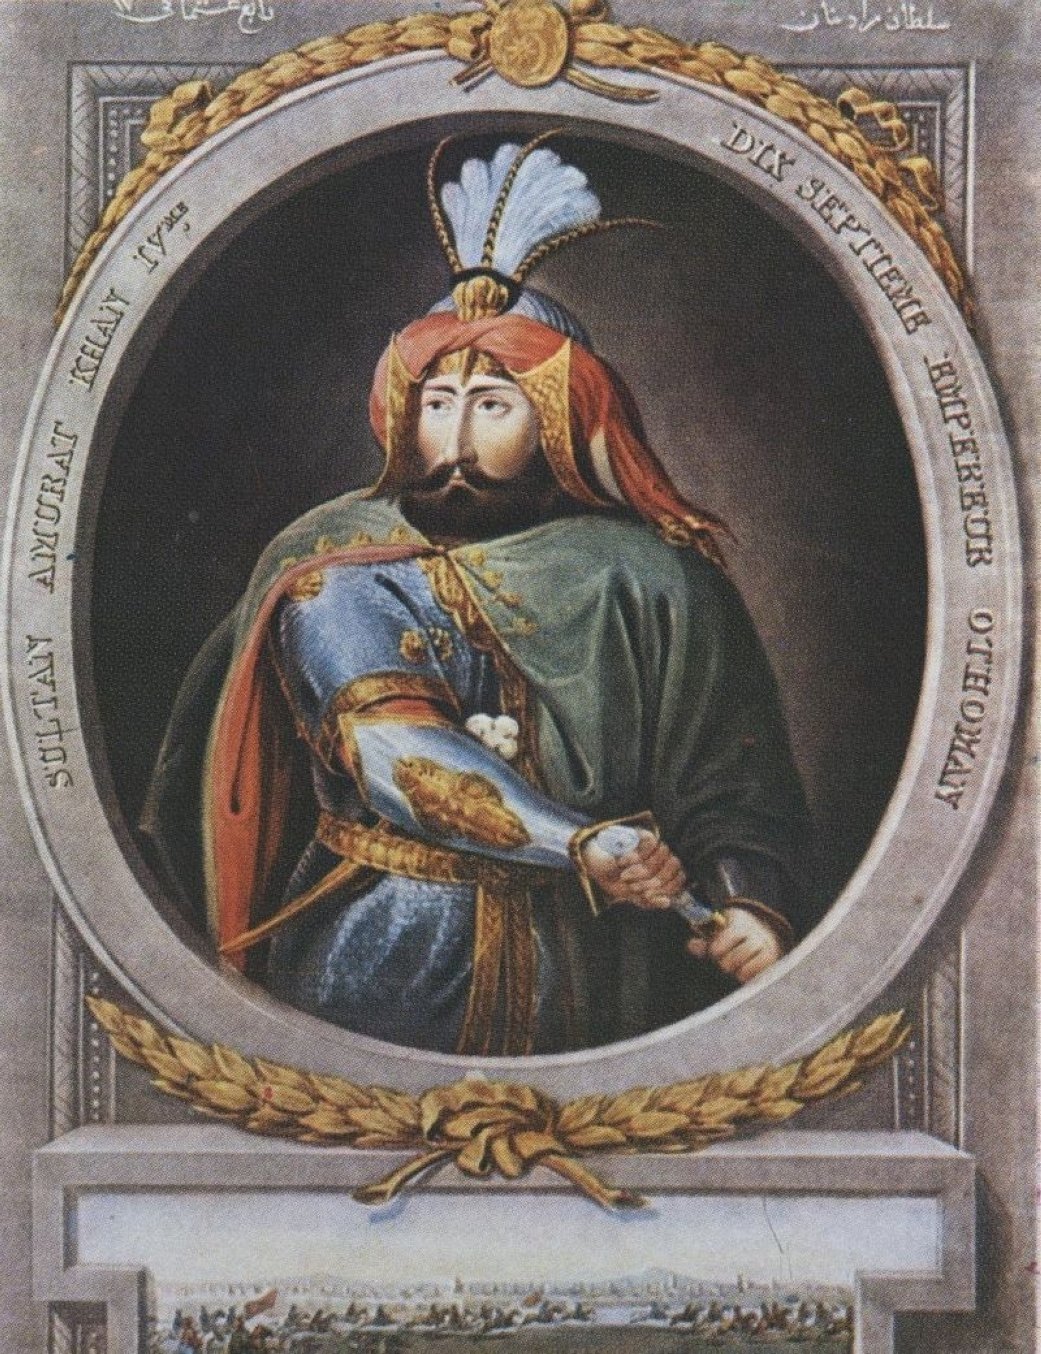 A portrait of Sultan Murad IV.